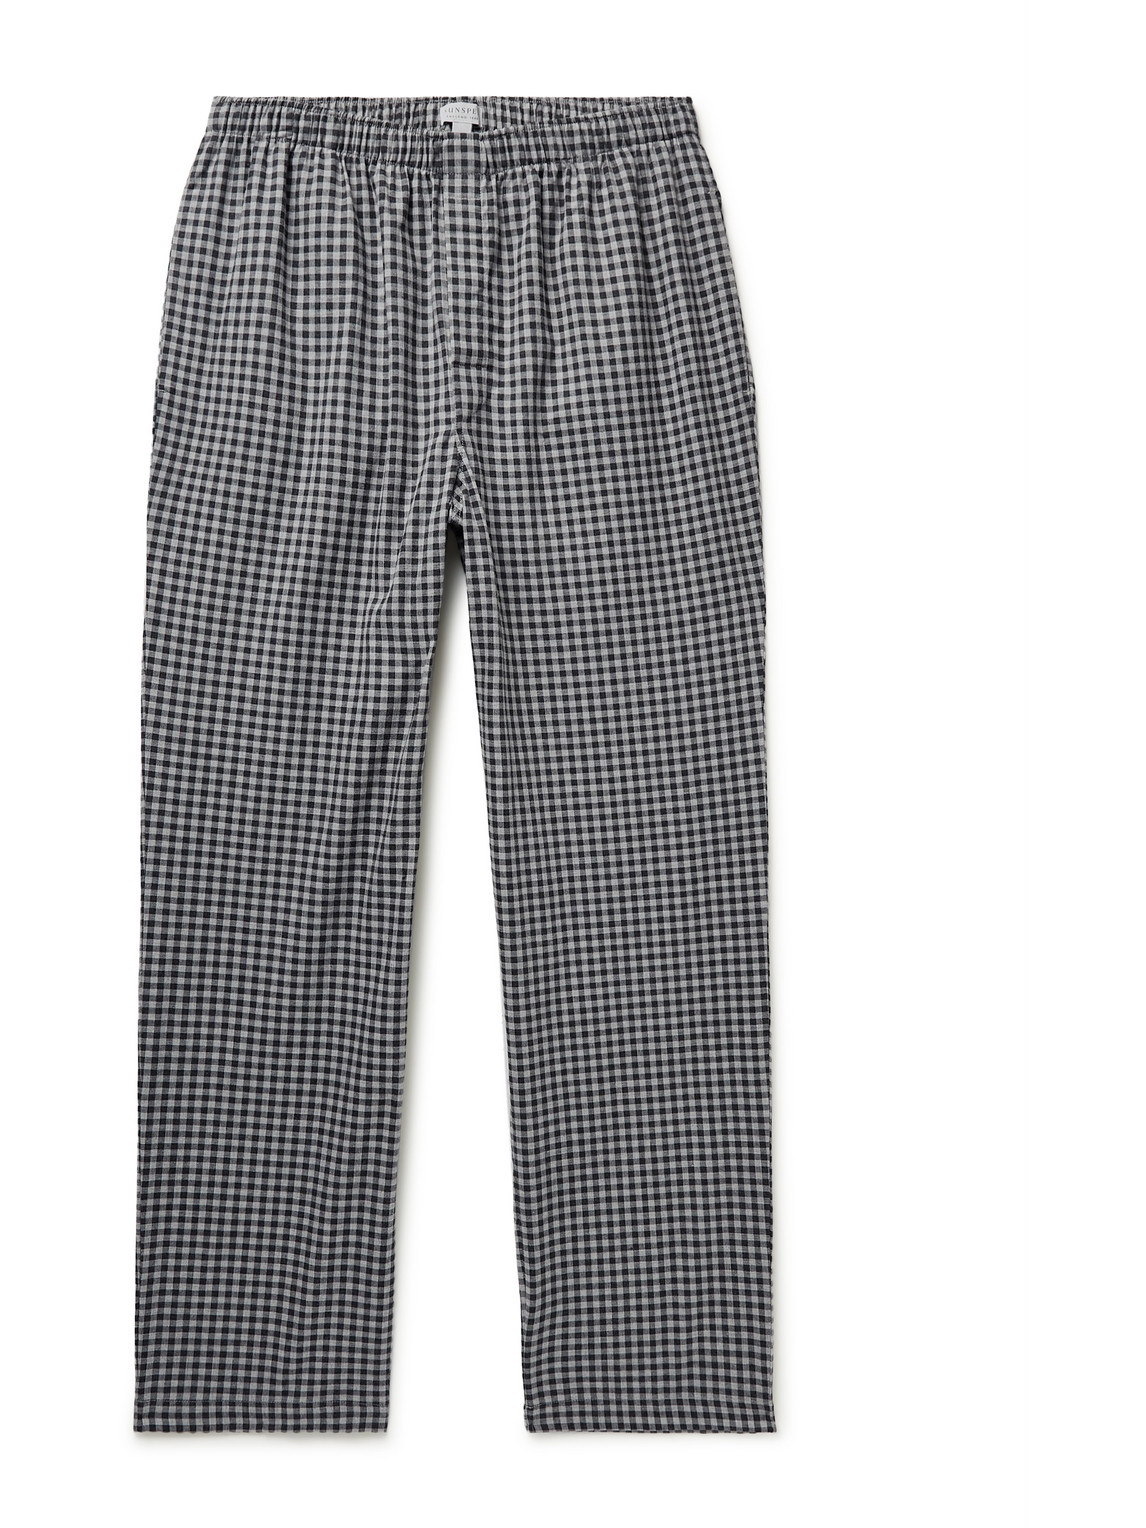 sunspel - checked cotton pyjama trousers - men - gray - s